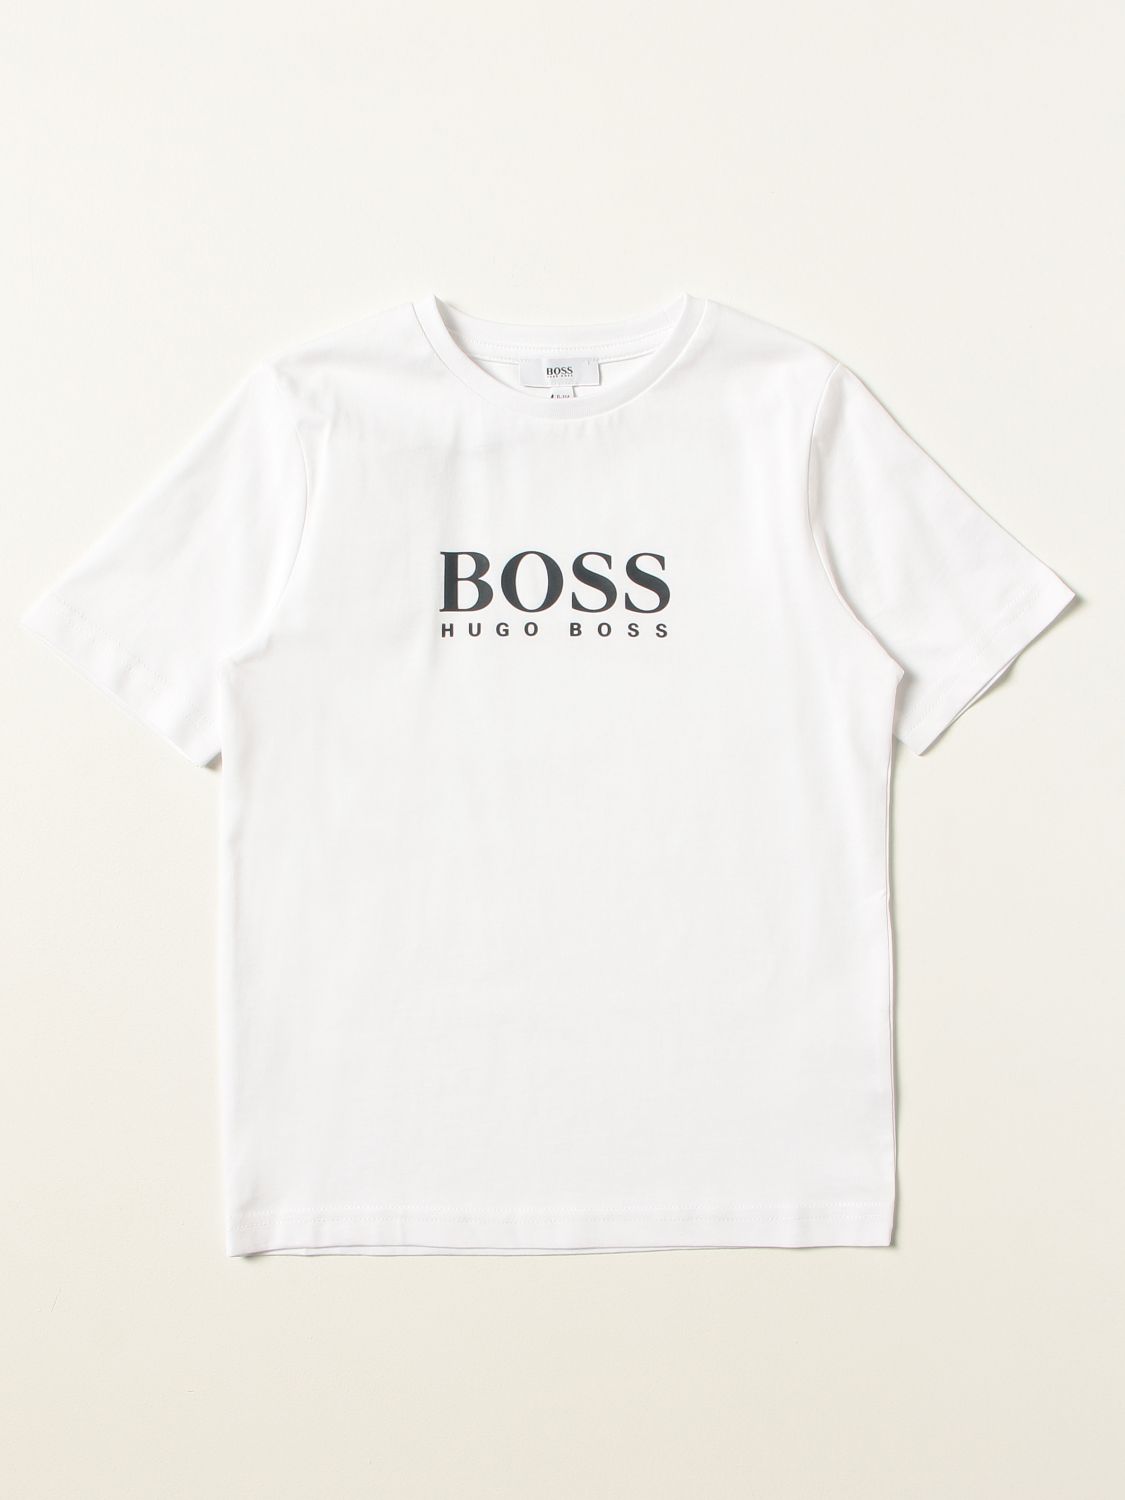 hugo boss t shirt